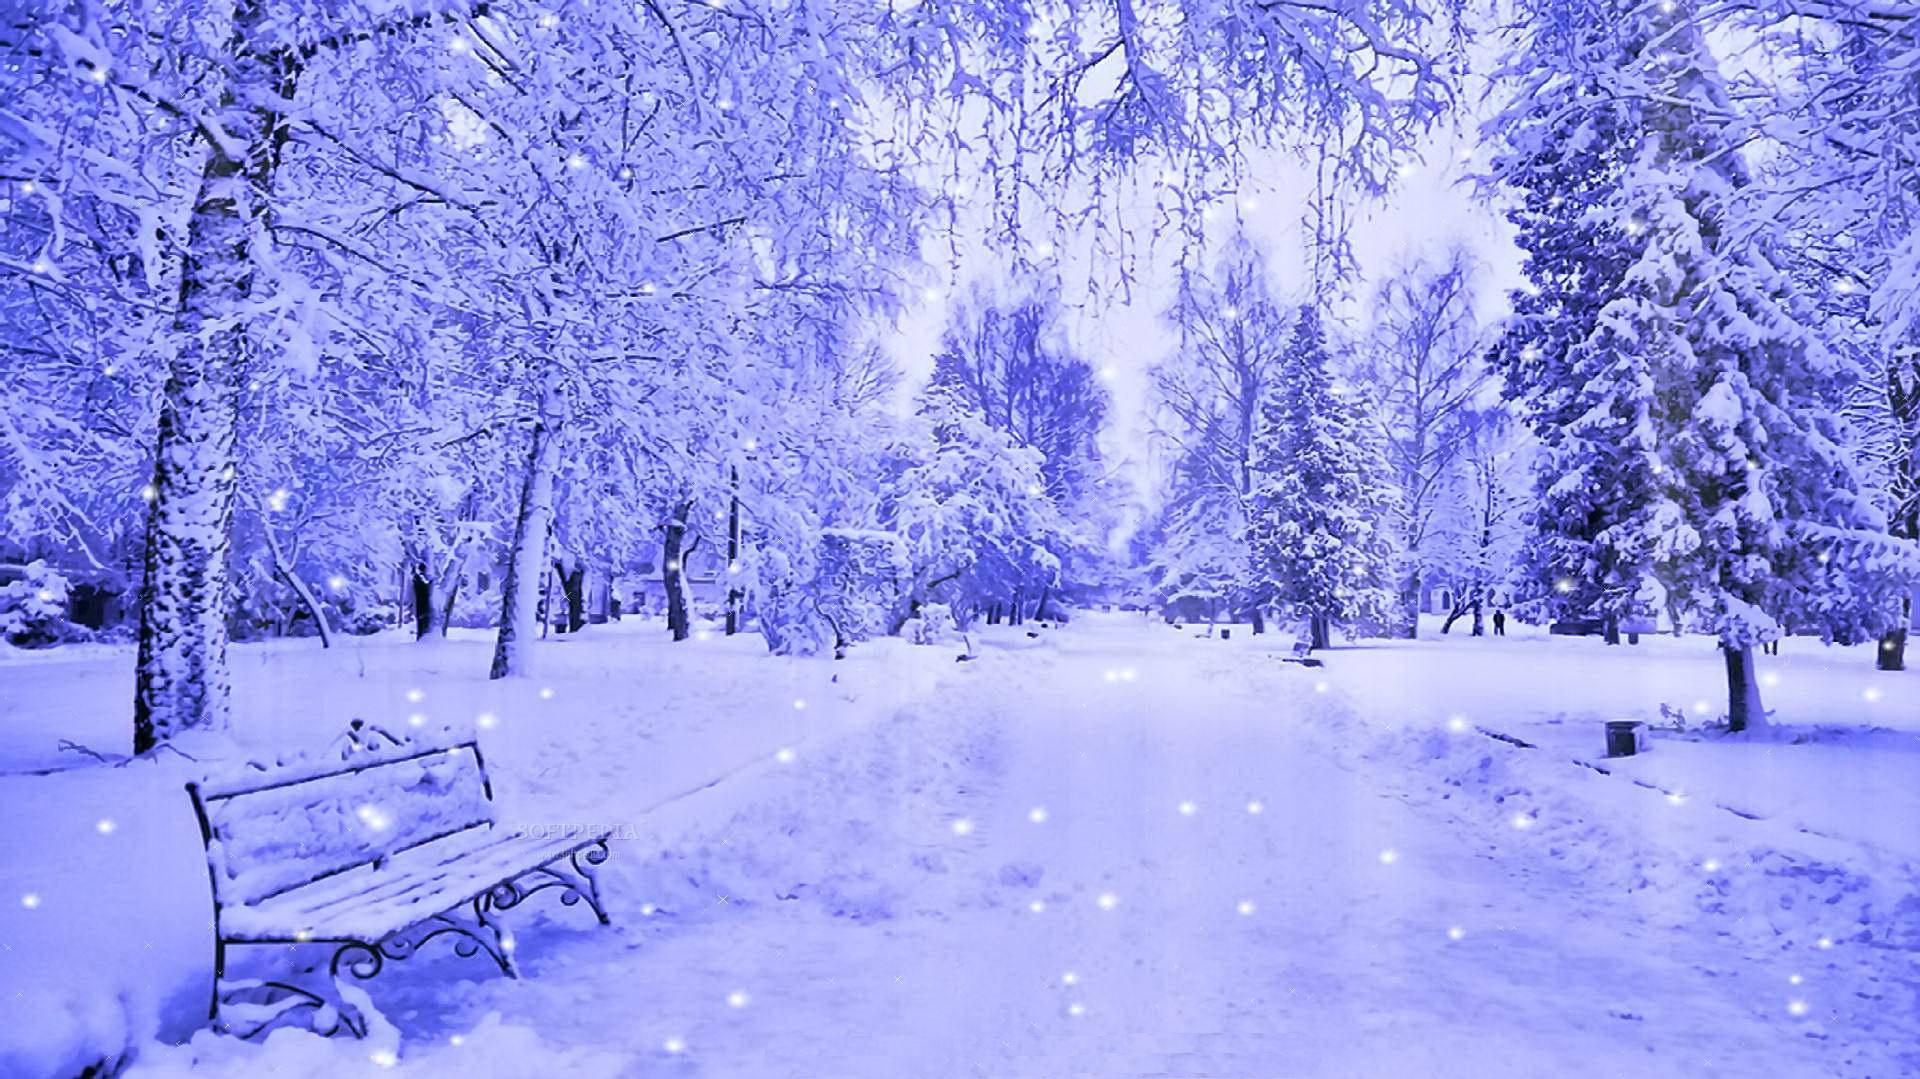 Enjoy The Tranquil Winter Scene Of Freshly Fallen Snow